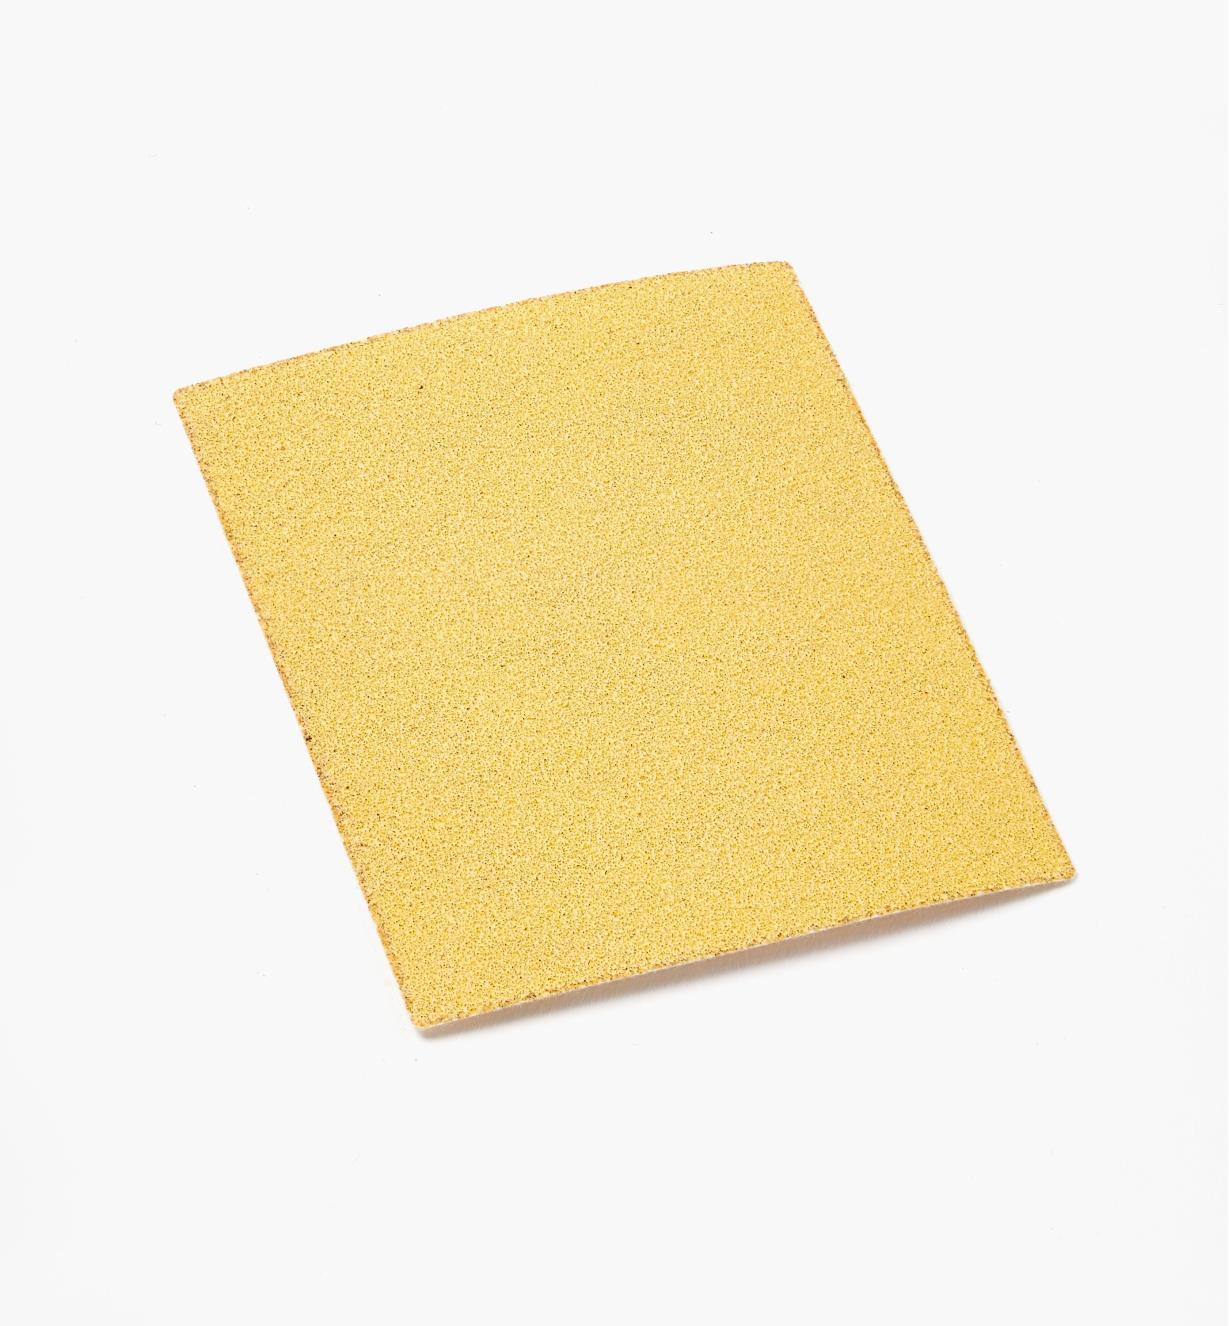 08K3452 - 100x Mirka Gold Grip Sheet, 3" × 4", ea.